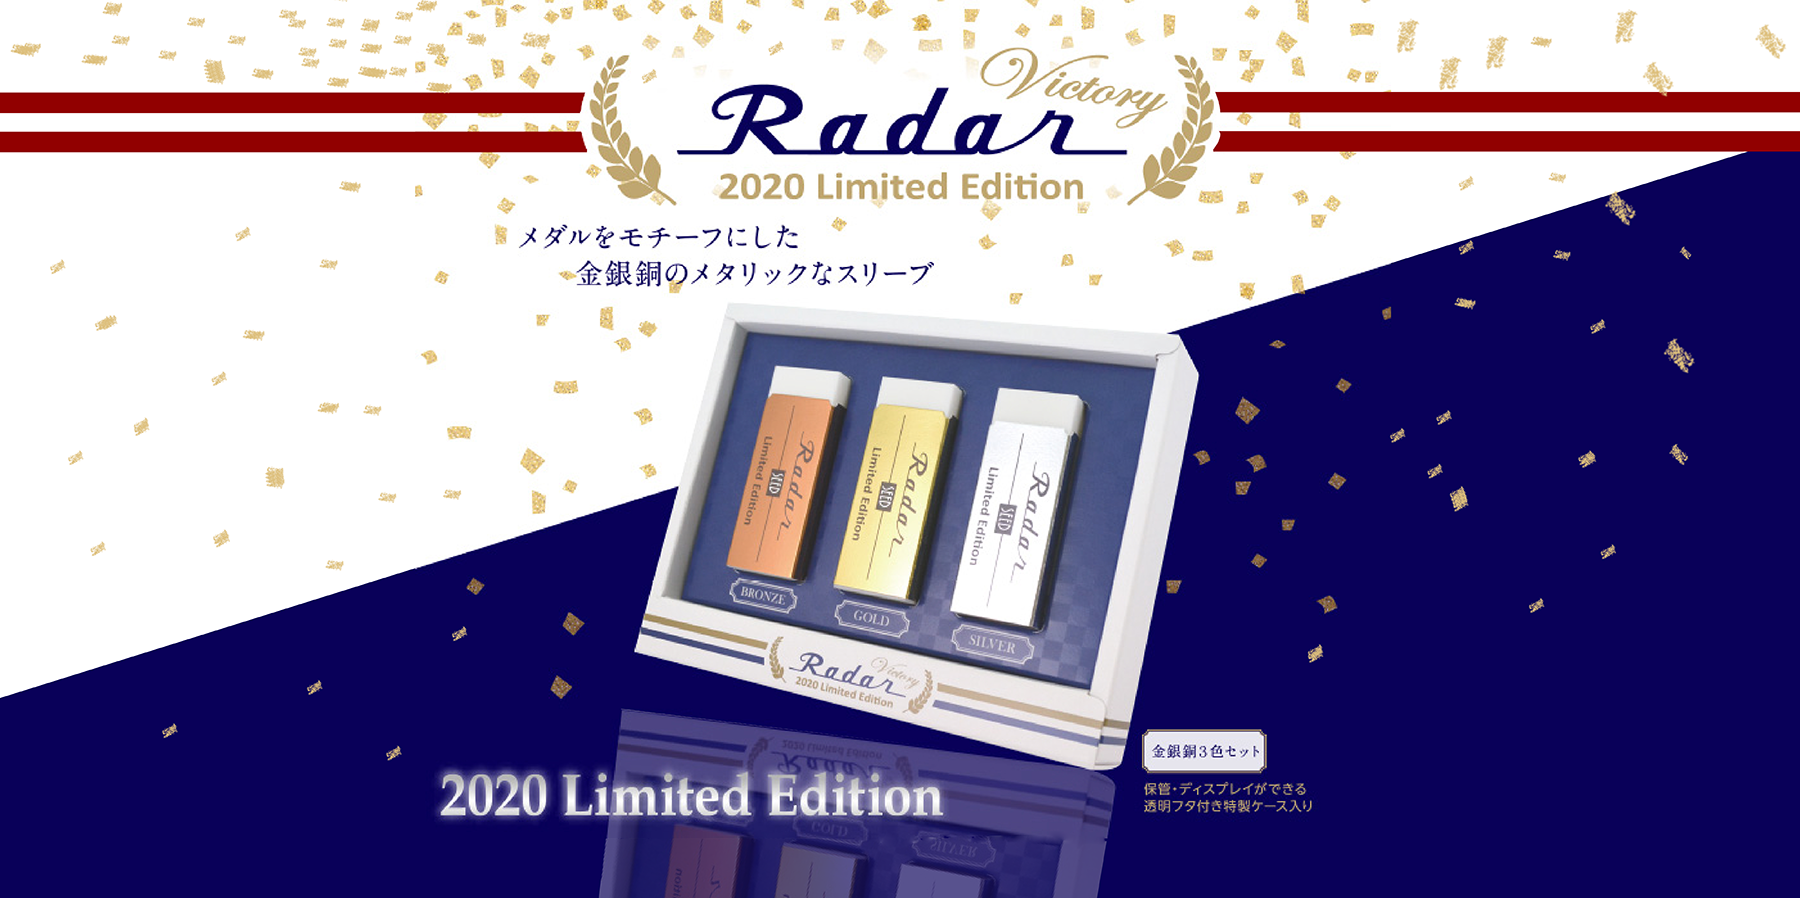 Radar Seed Eraser Set - 2020 Victory Limited Edition